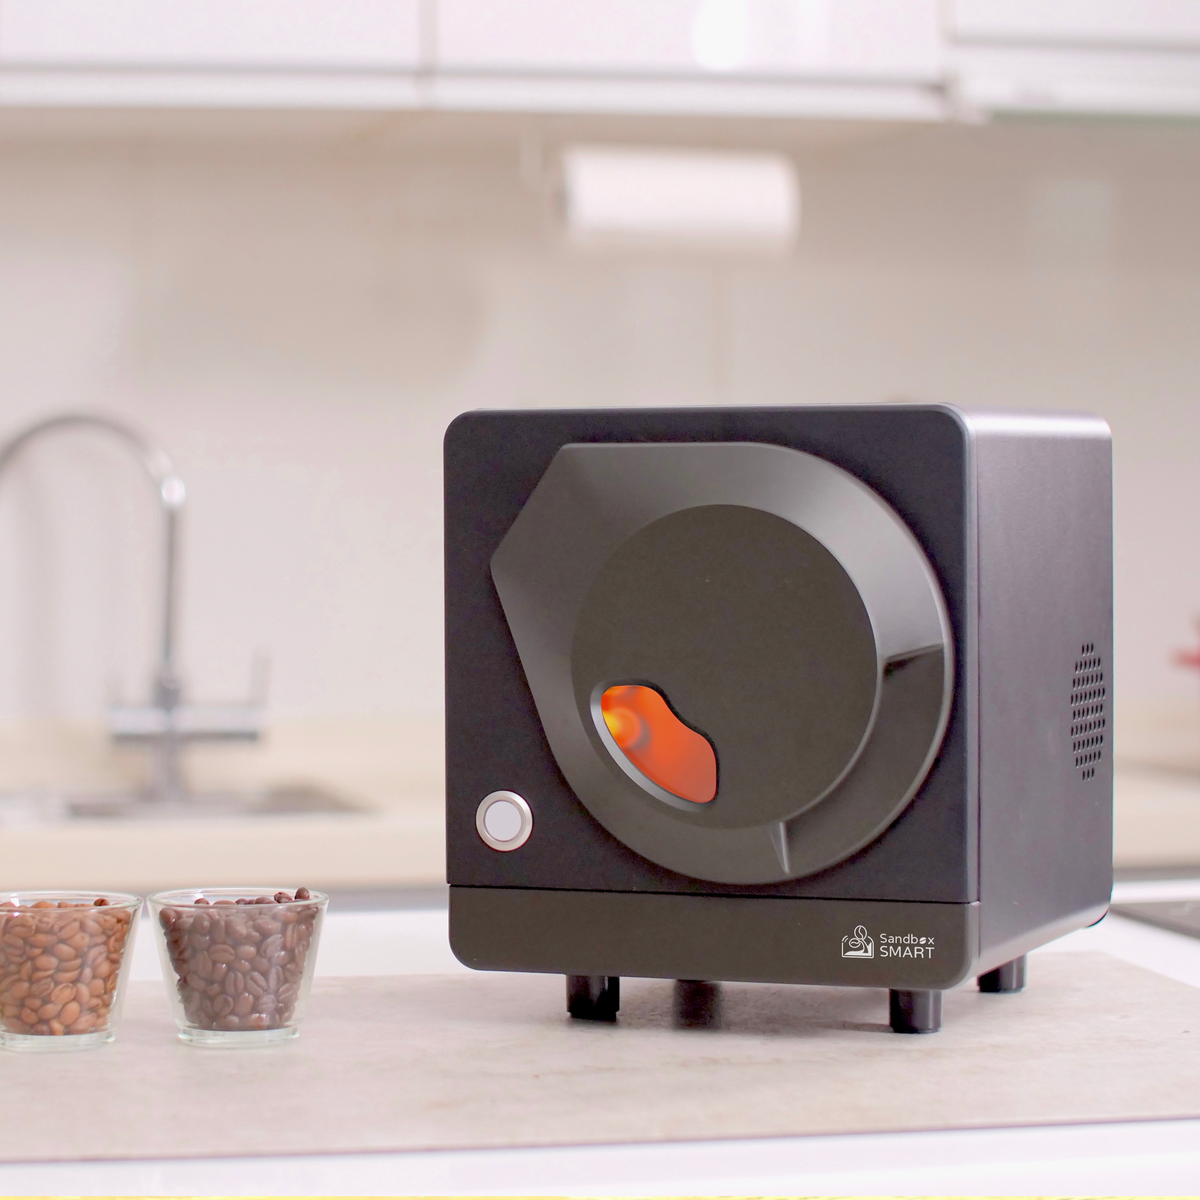 Sandbox Smart R1 Coffee Roaster with Coffee Bean Cooler